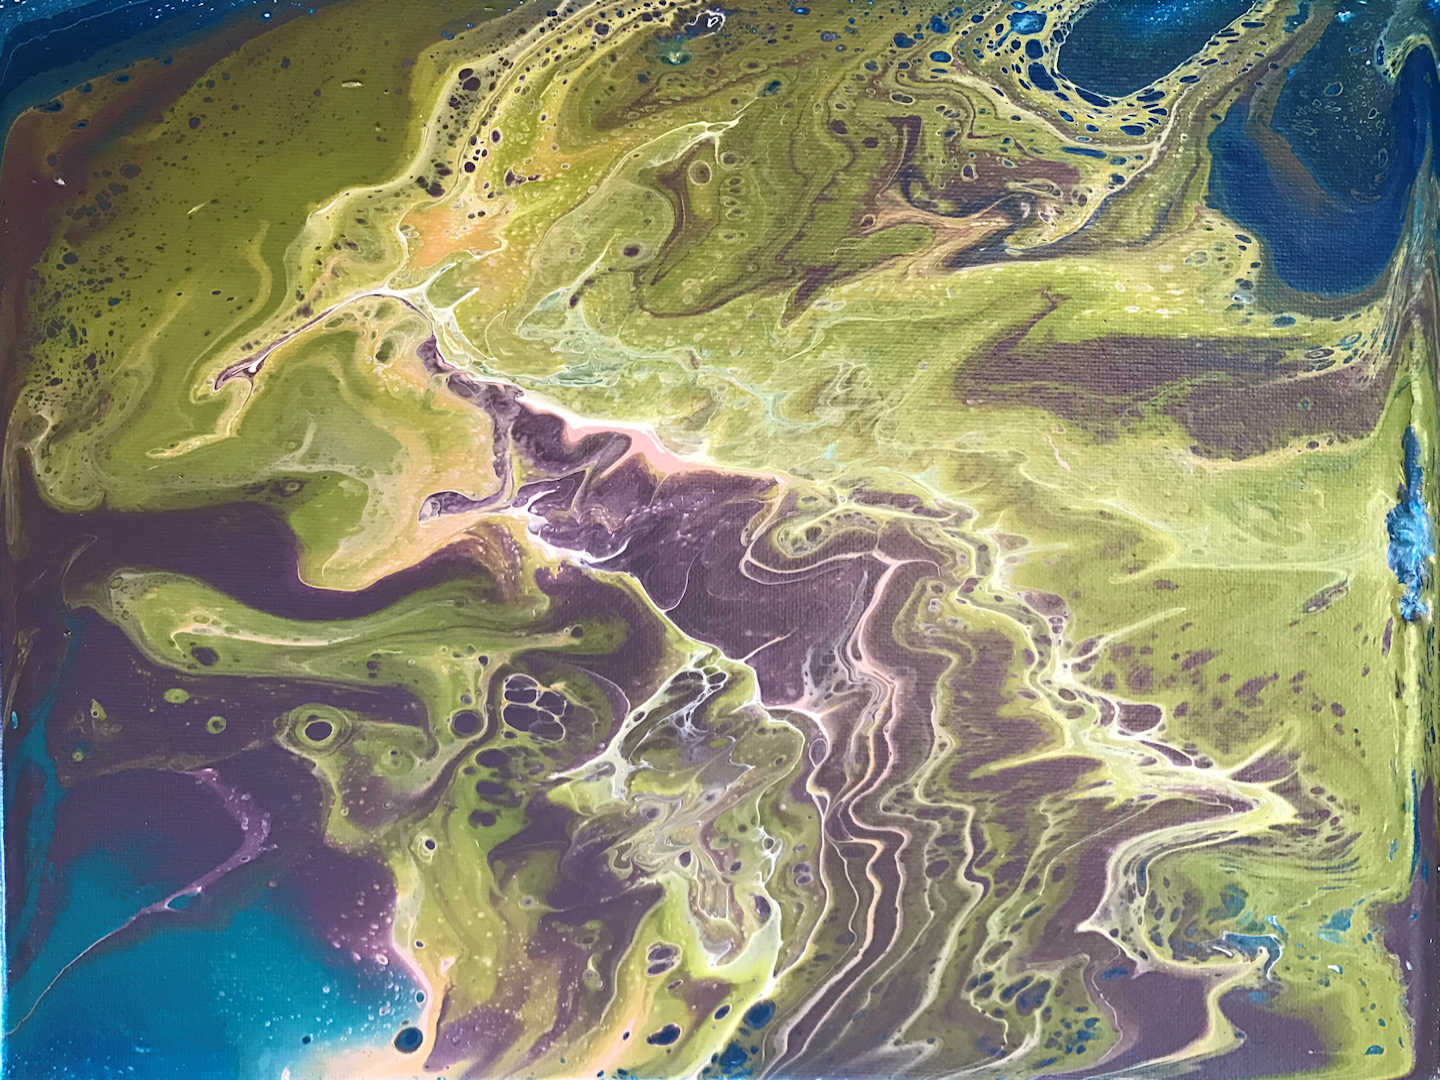 acrylic liquid pour artwork - 11 x 14 - purple, green, blue, white